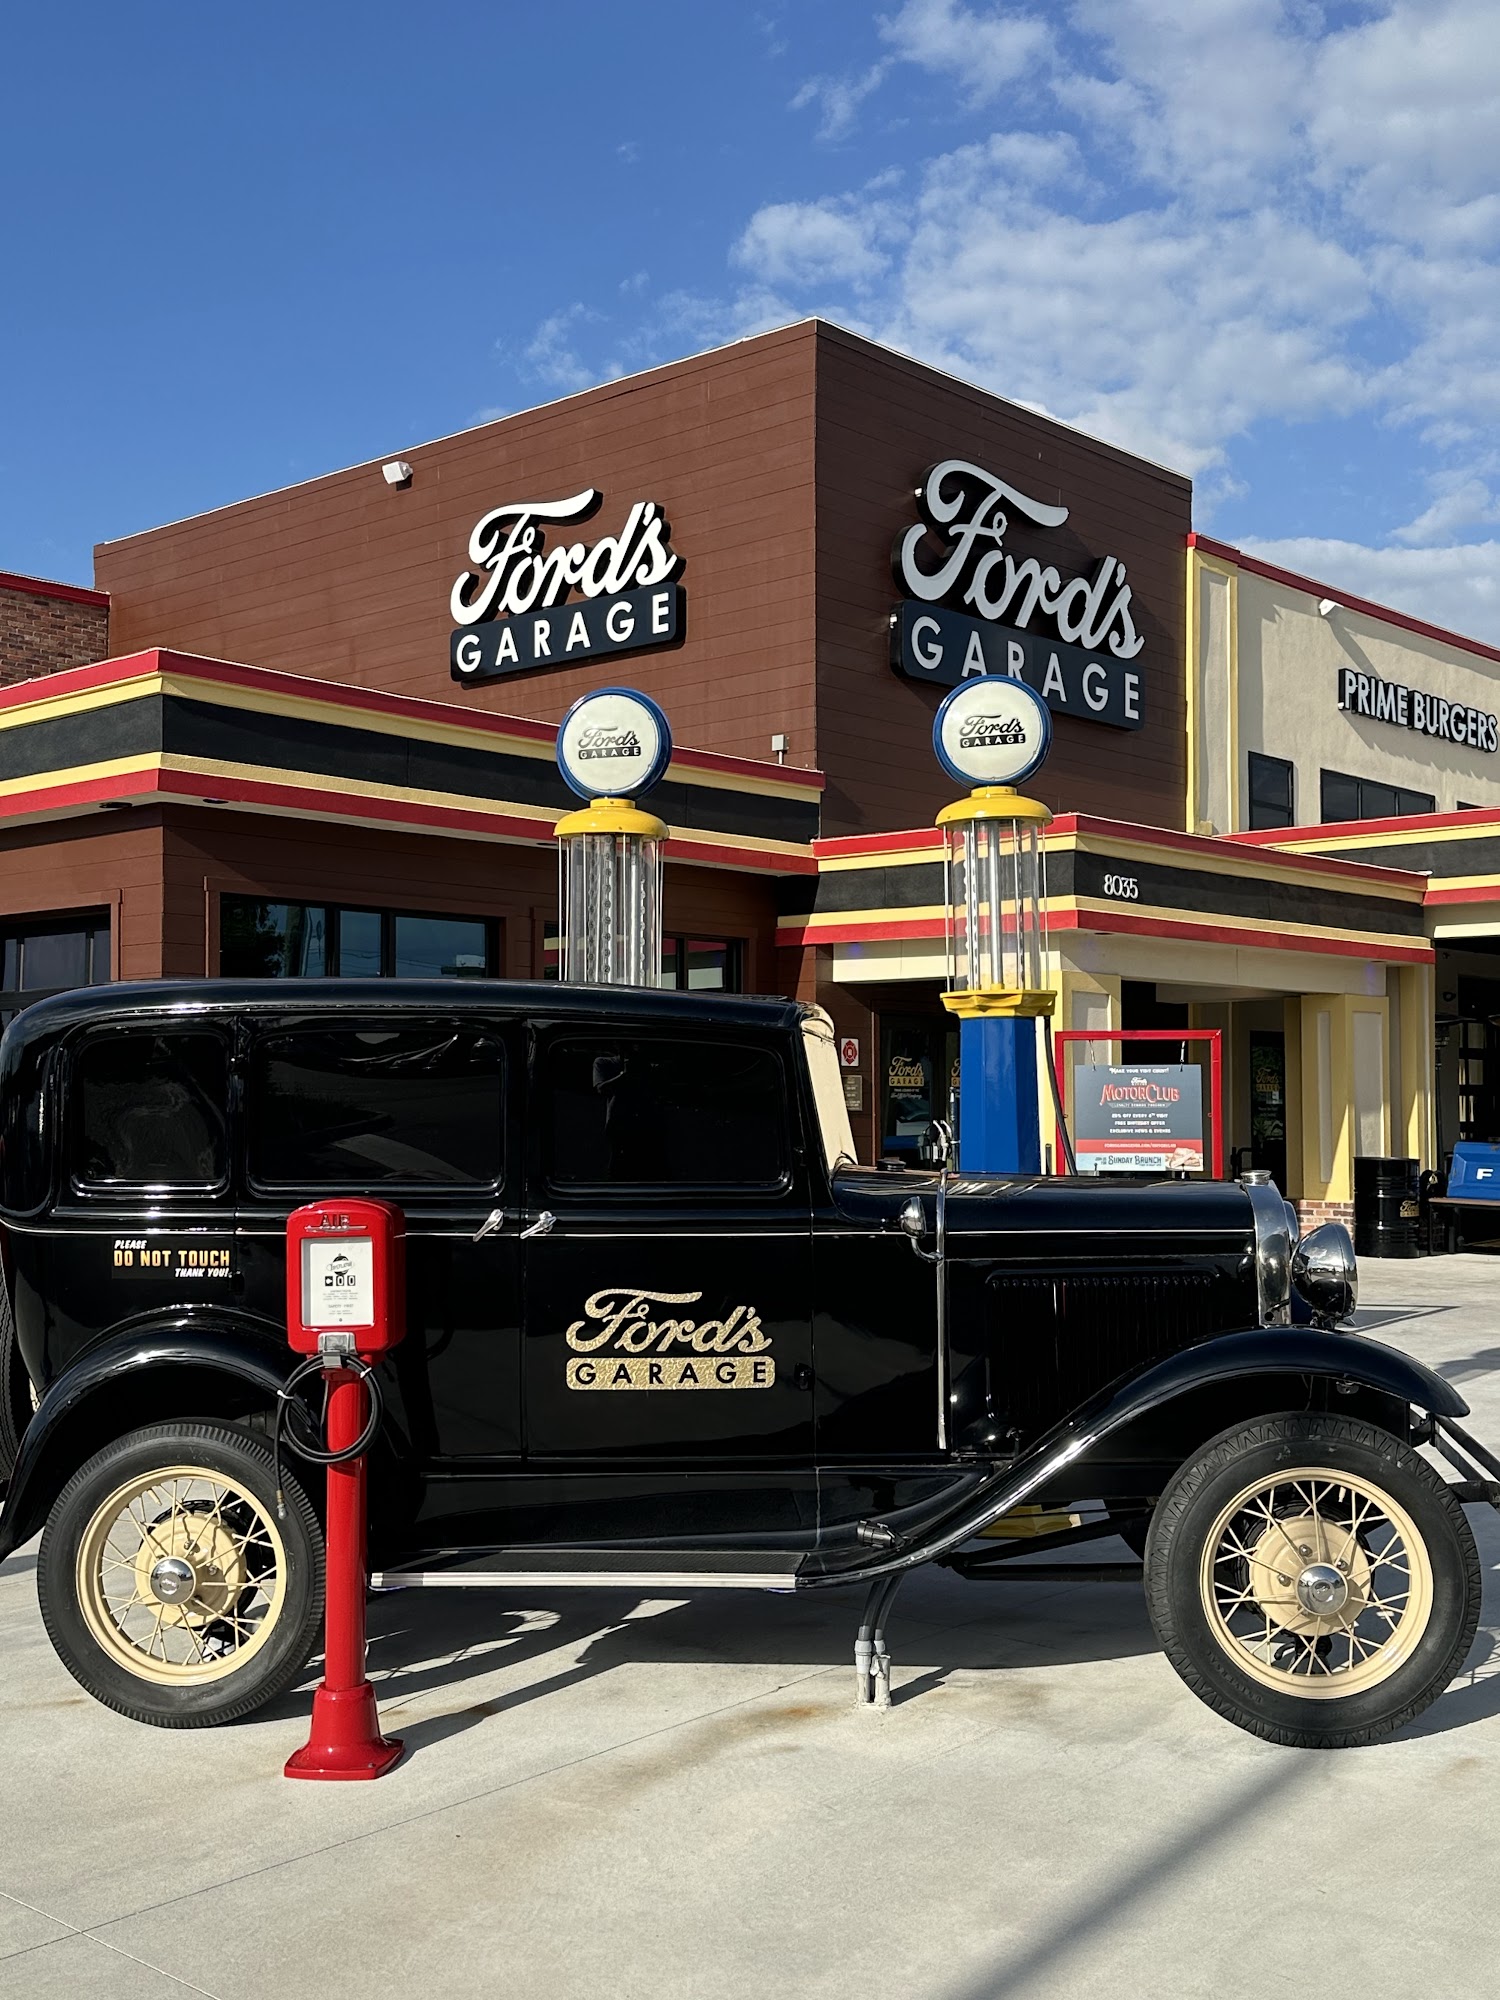 Ford's Garage ChampionsGate